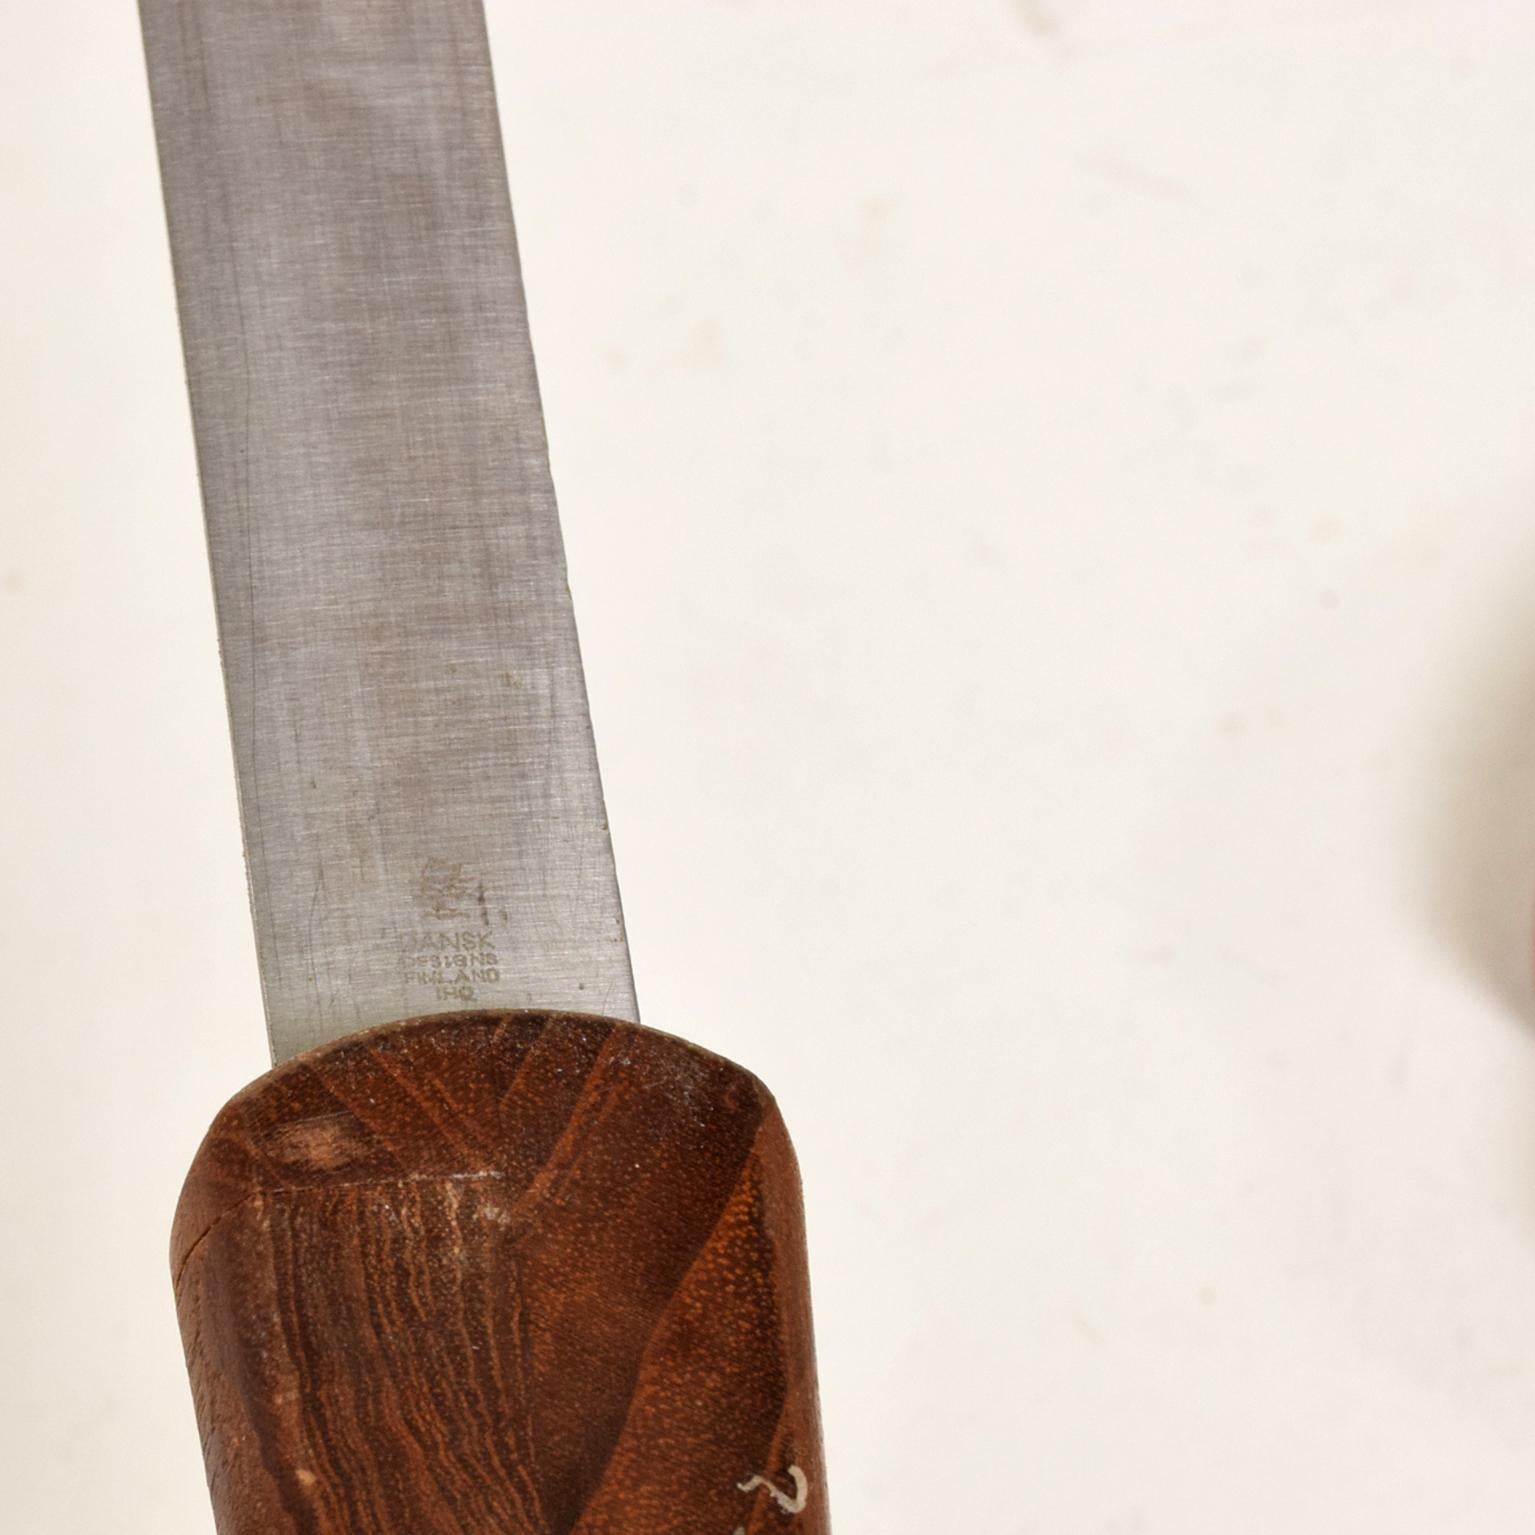 Stainless Steel Midcentury Danish Modern Dansk IHQ Jens Quistgaard Teak Cutting Board with Knife